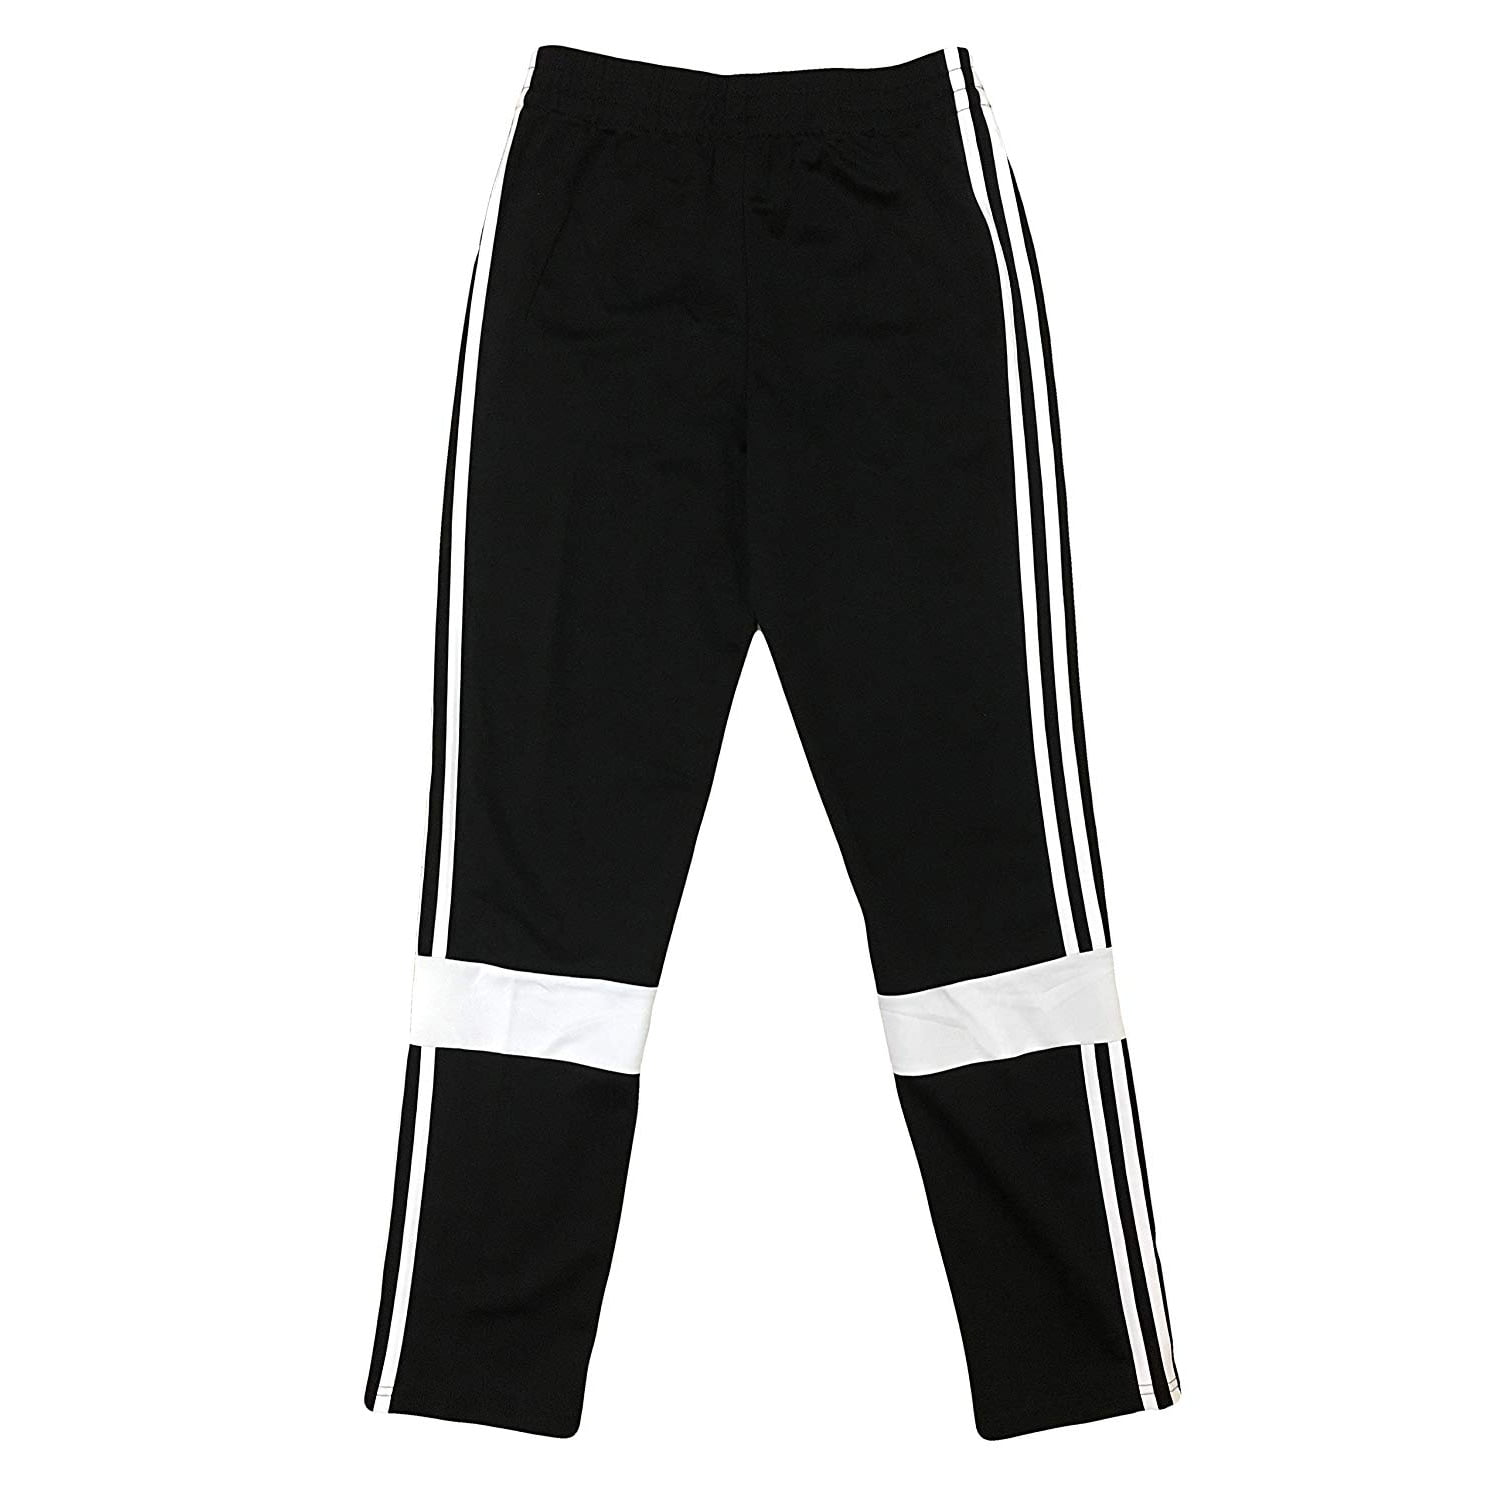 Adidas Boy's Youth 3 Stripes Performance Midfielder Warm Up Track Pants ( Black/White, Medium) 